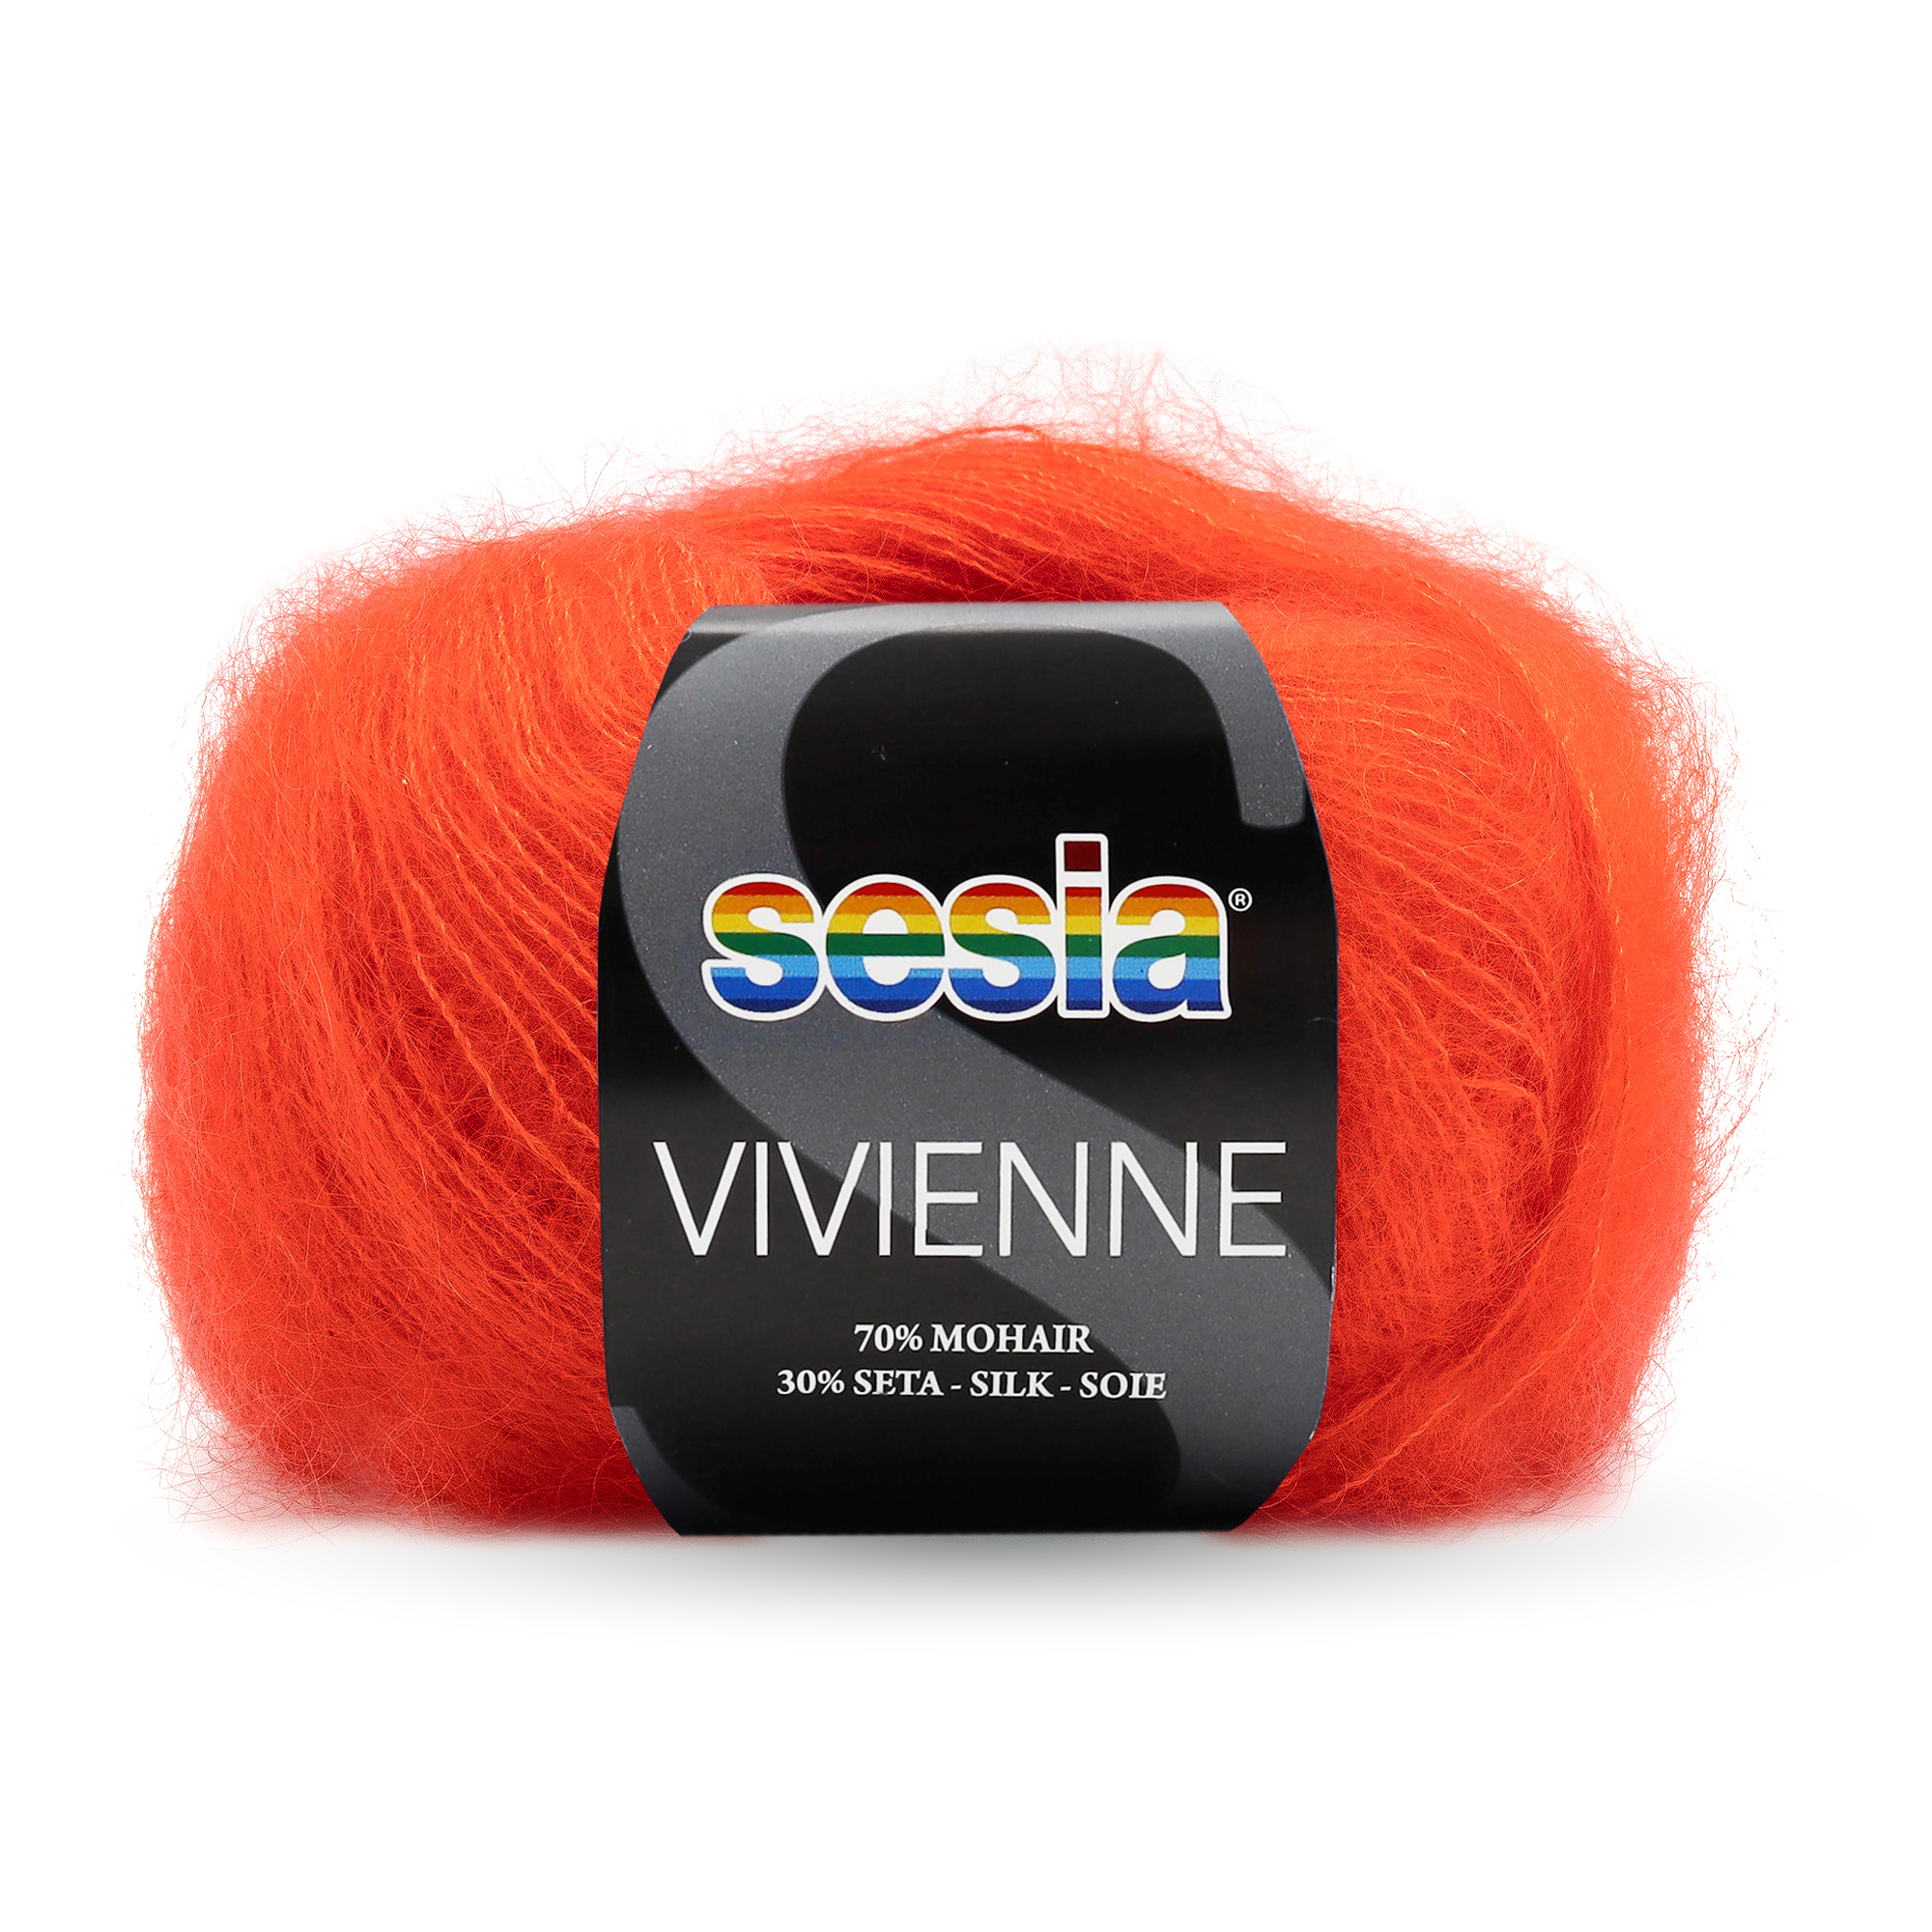 SESIA Vivienne - 3779 arancio-acceso